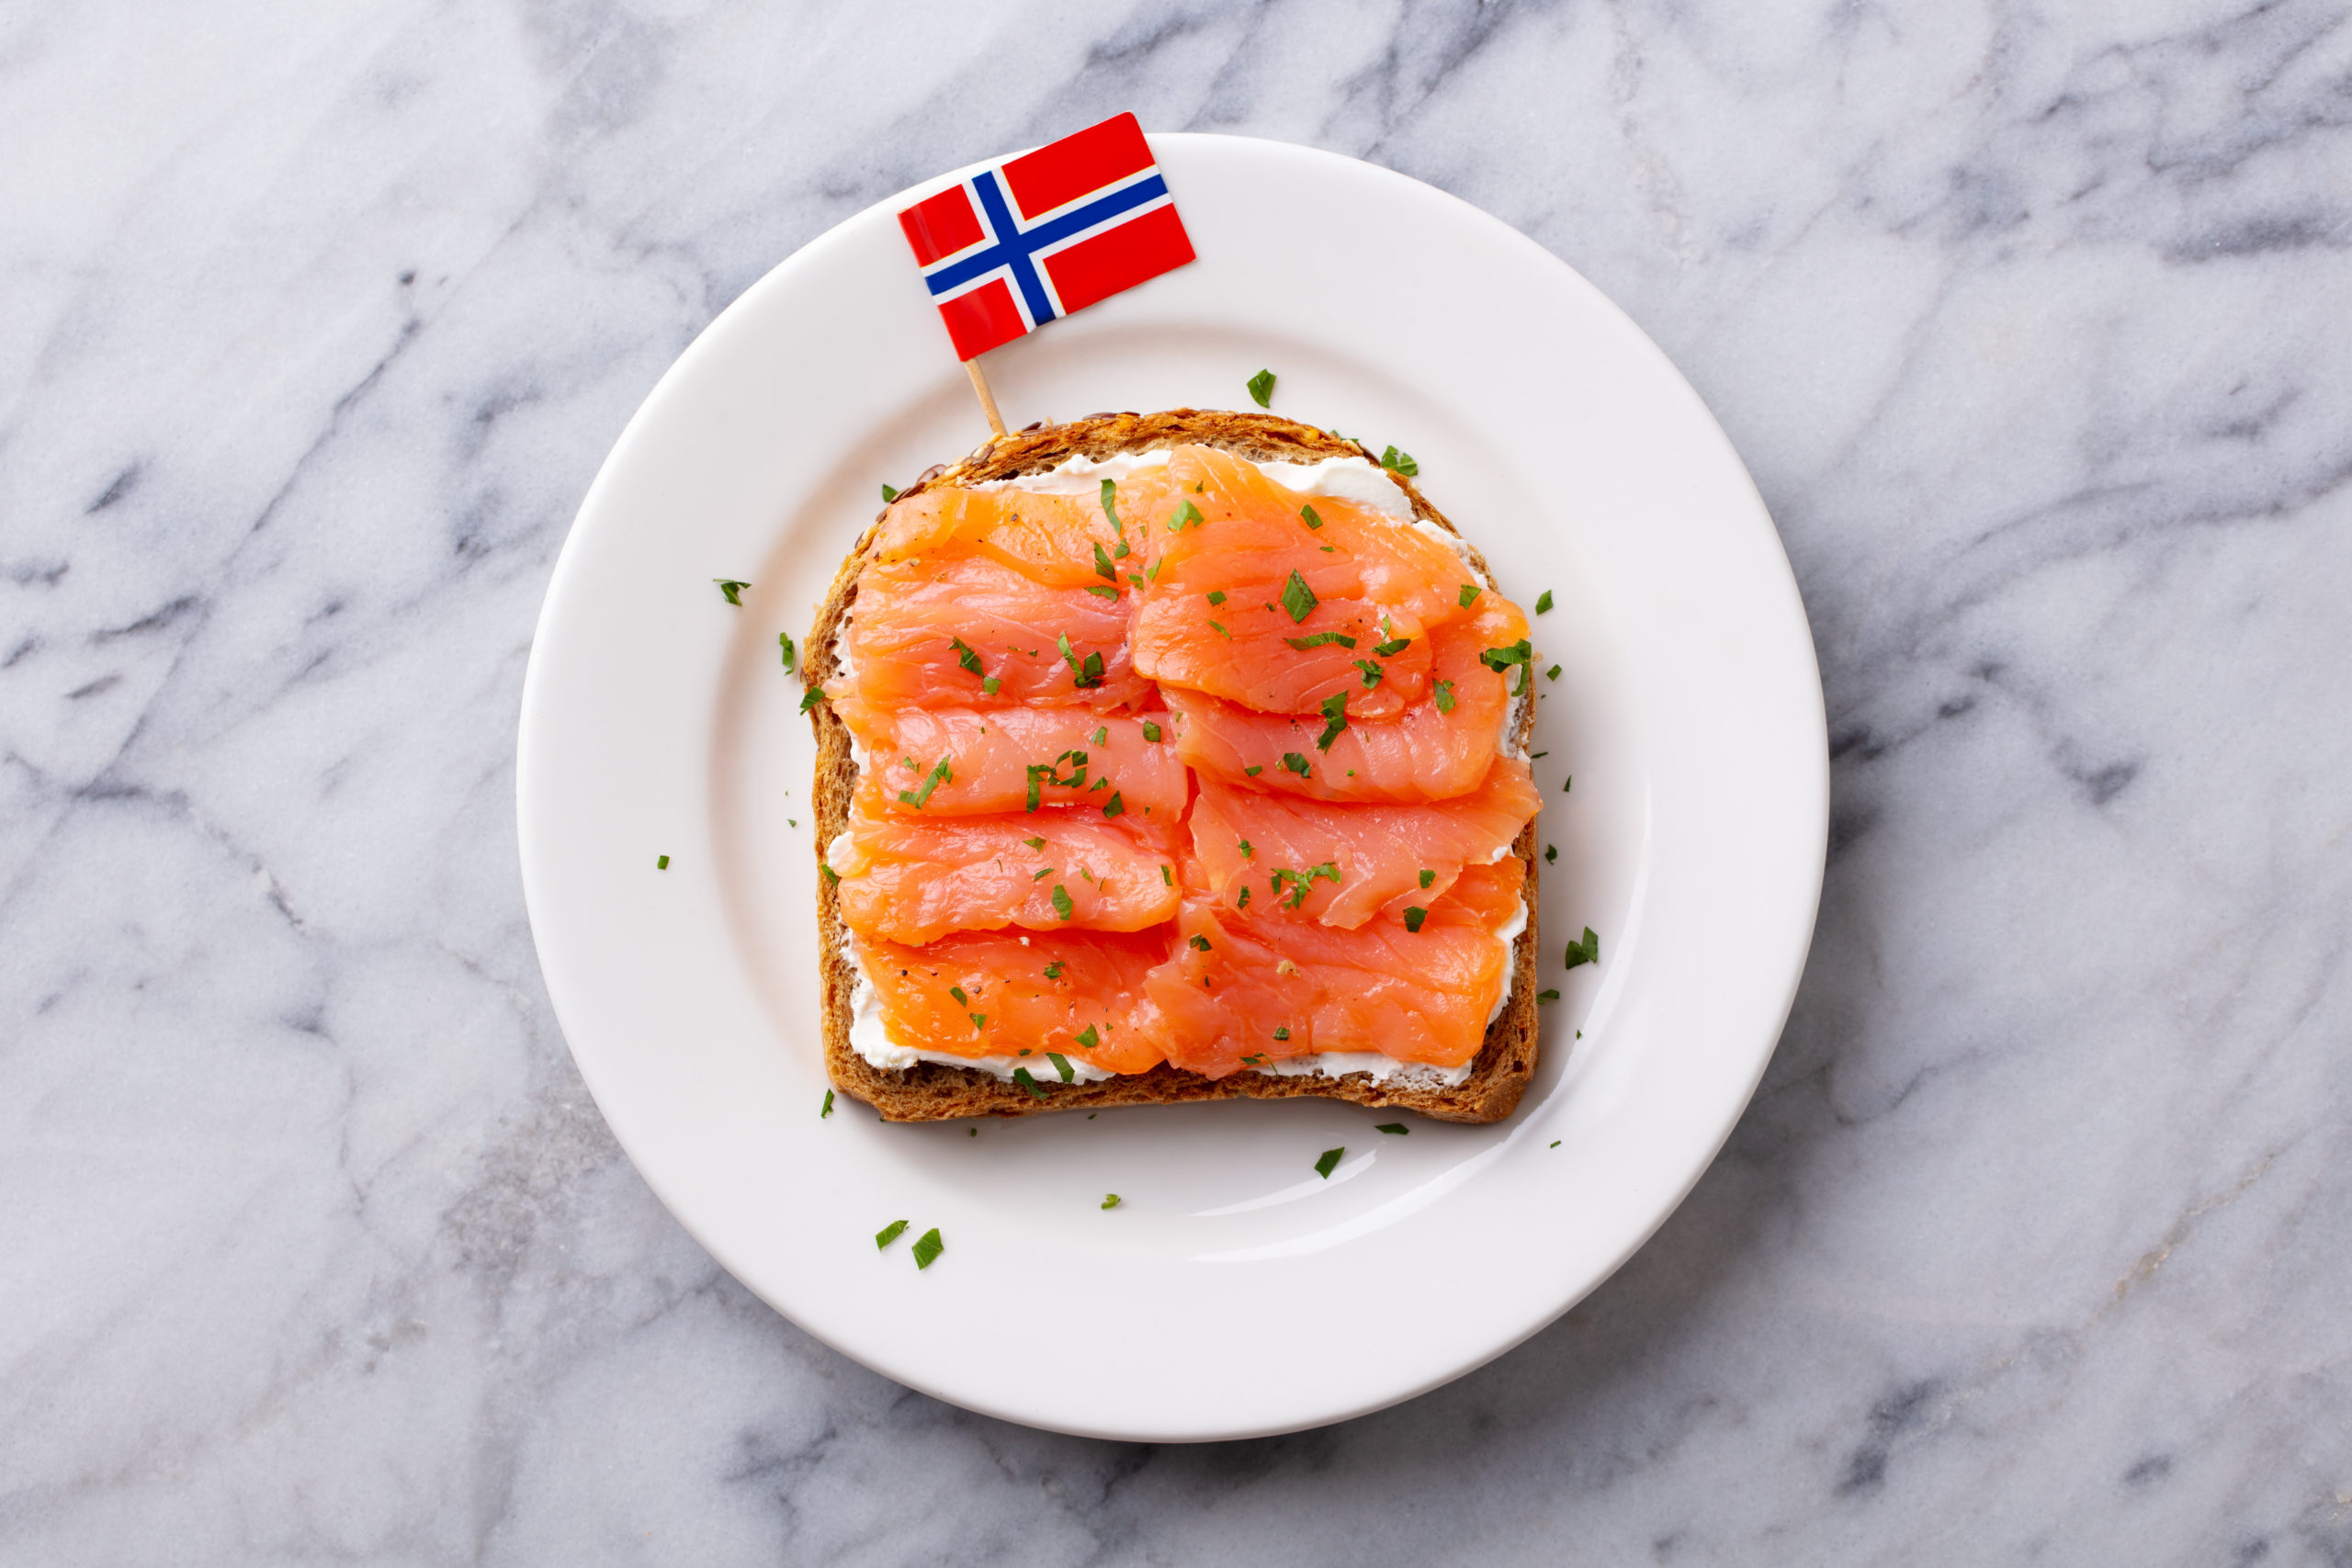 Norwegian flag + smoked salmon